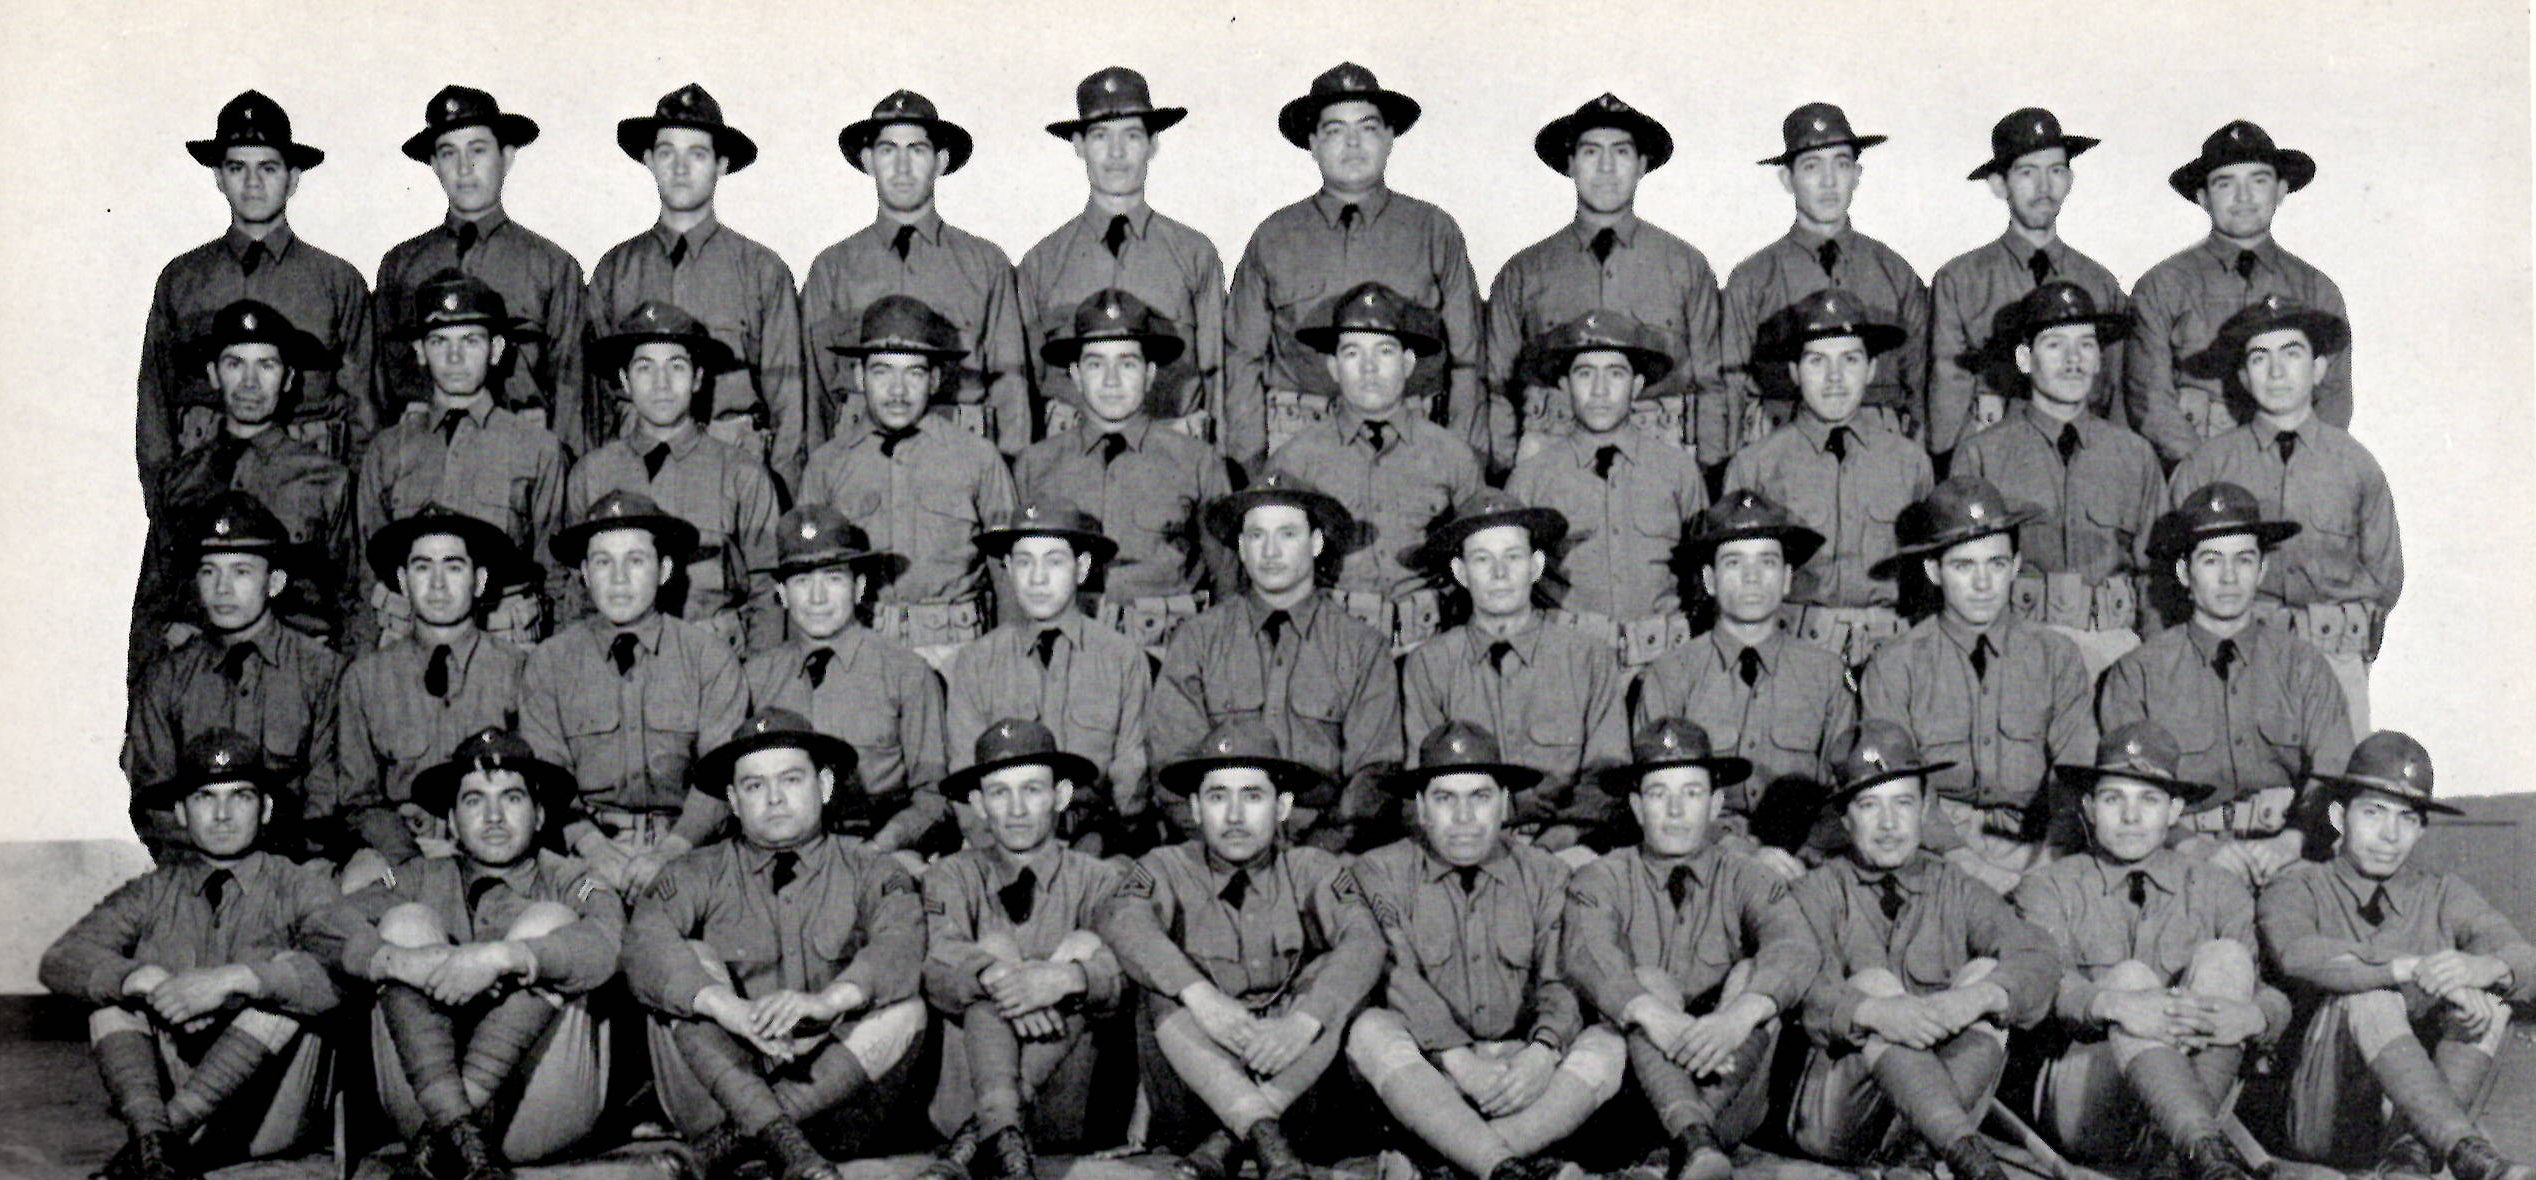 Company E 141st Infantry Regiment 36th Infantry Division - 1940